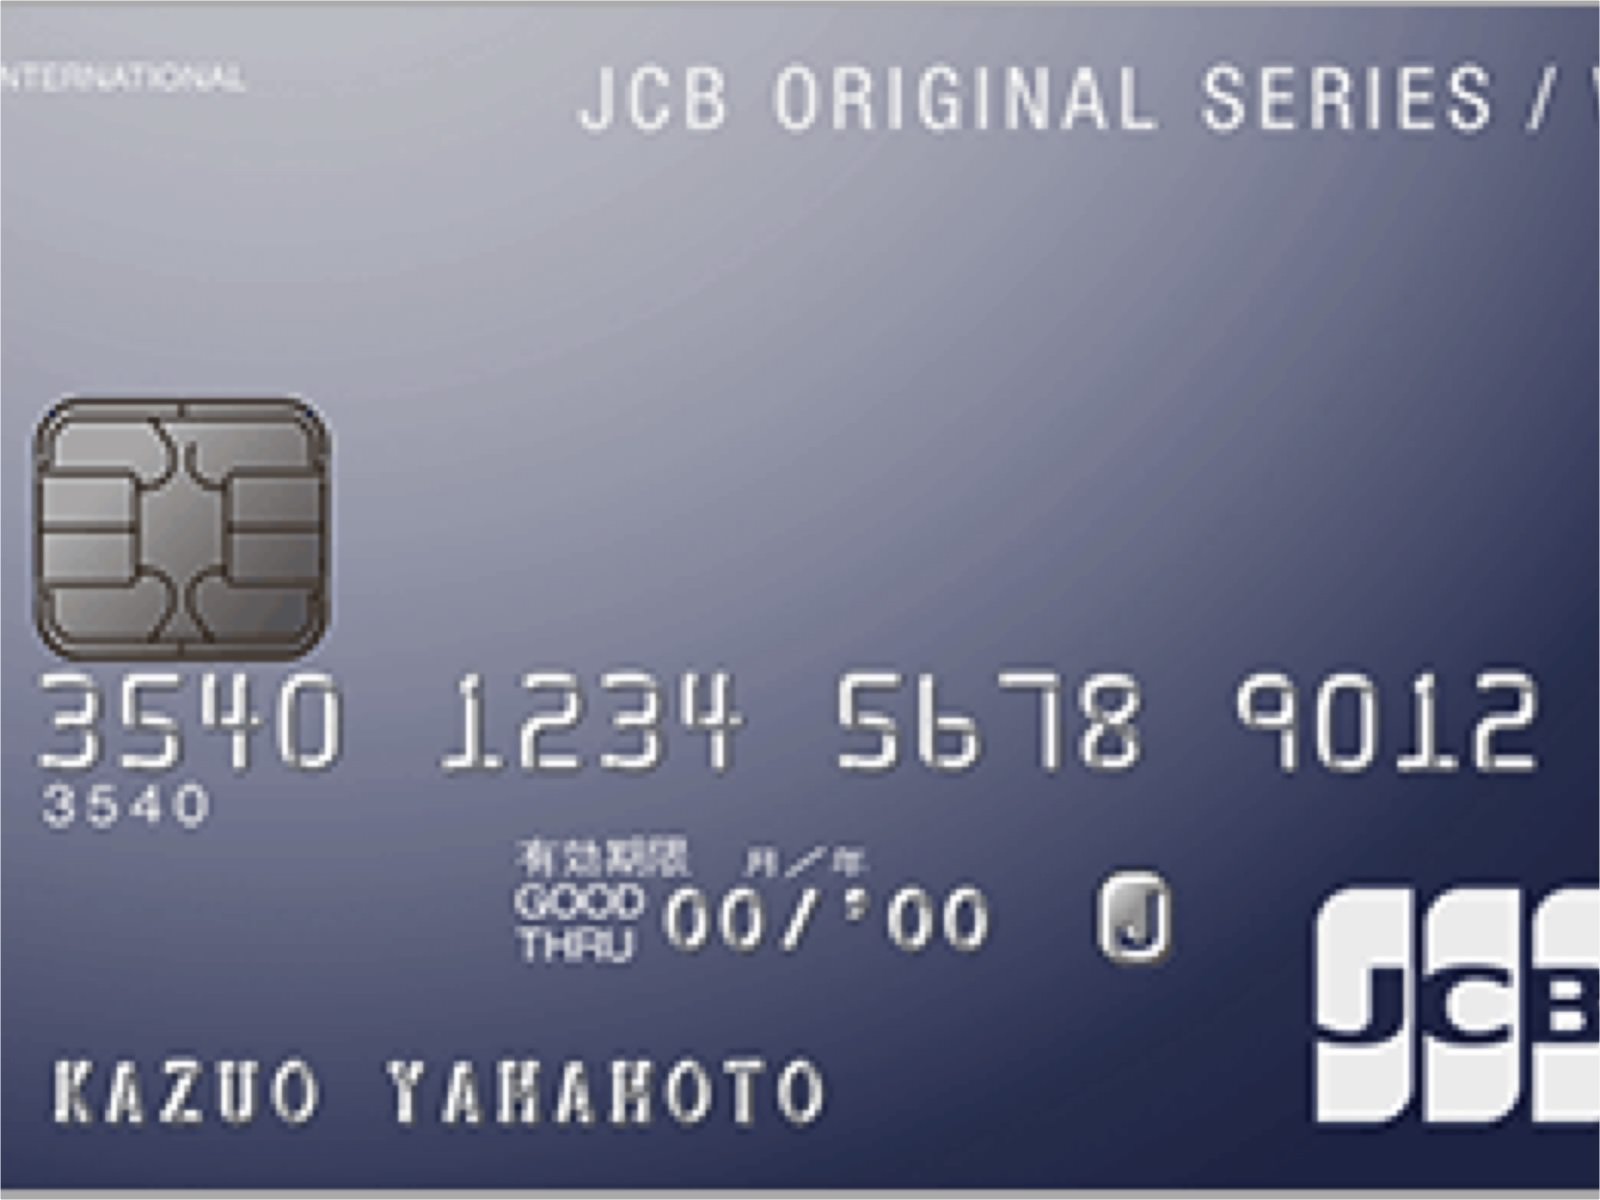 Jcb card w